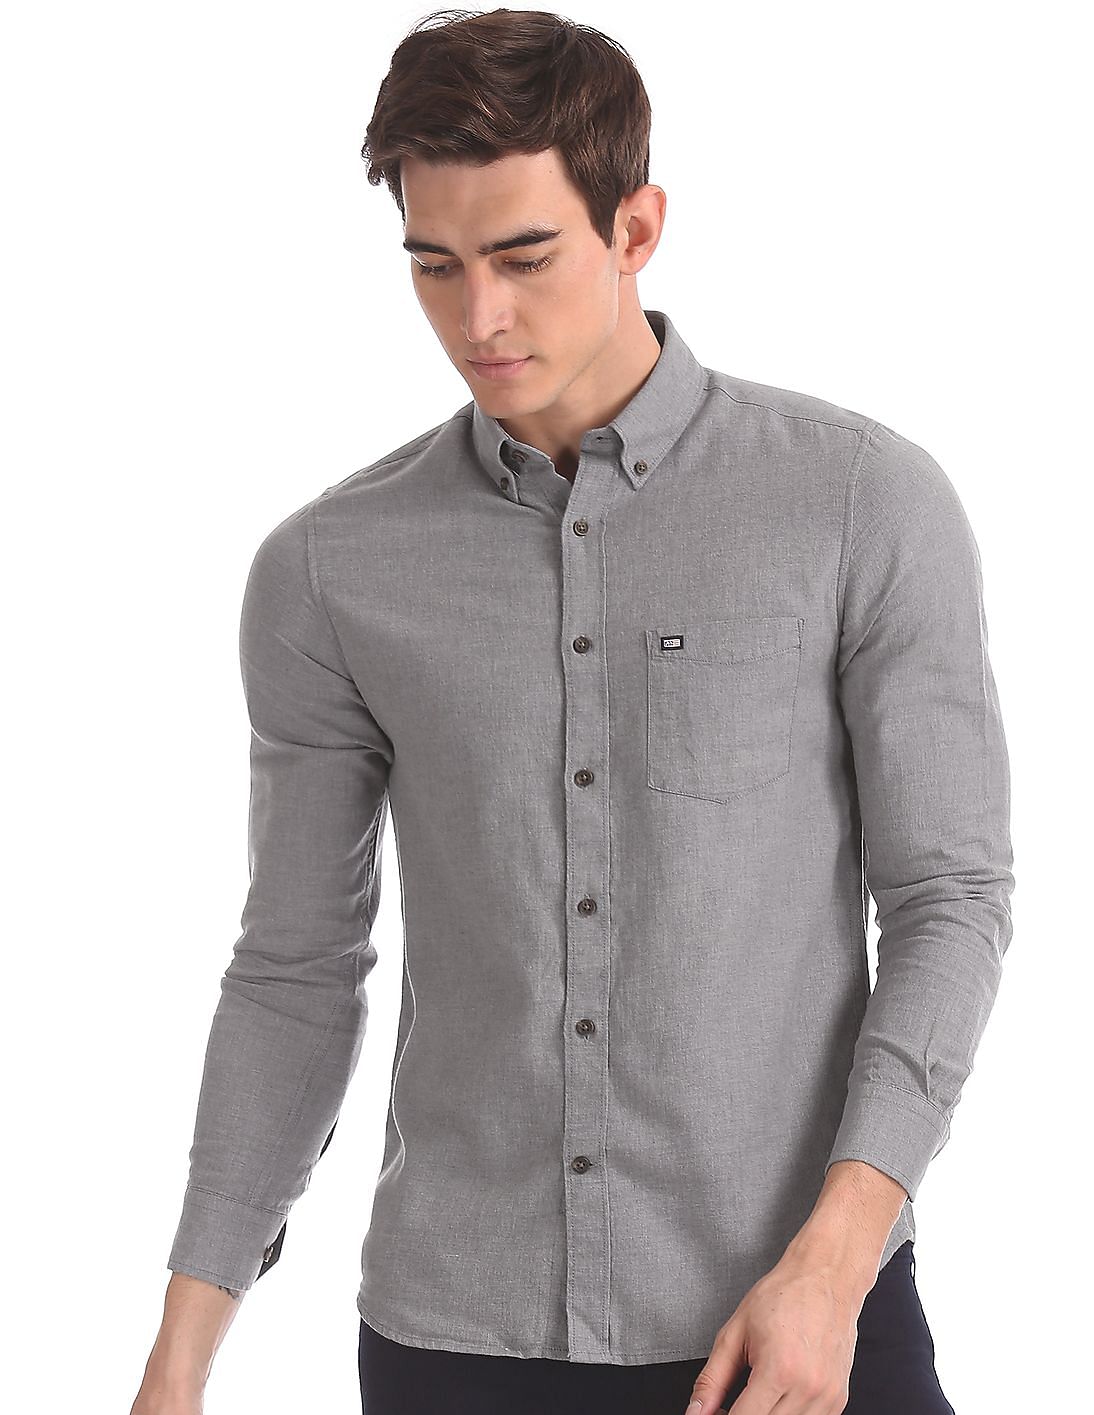 Buy Arrow Sports Grey Slim Fit Button Down Shirt - NNNOW.com